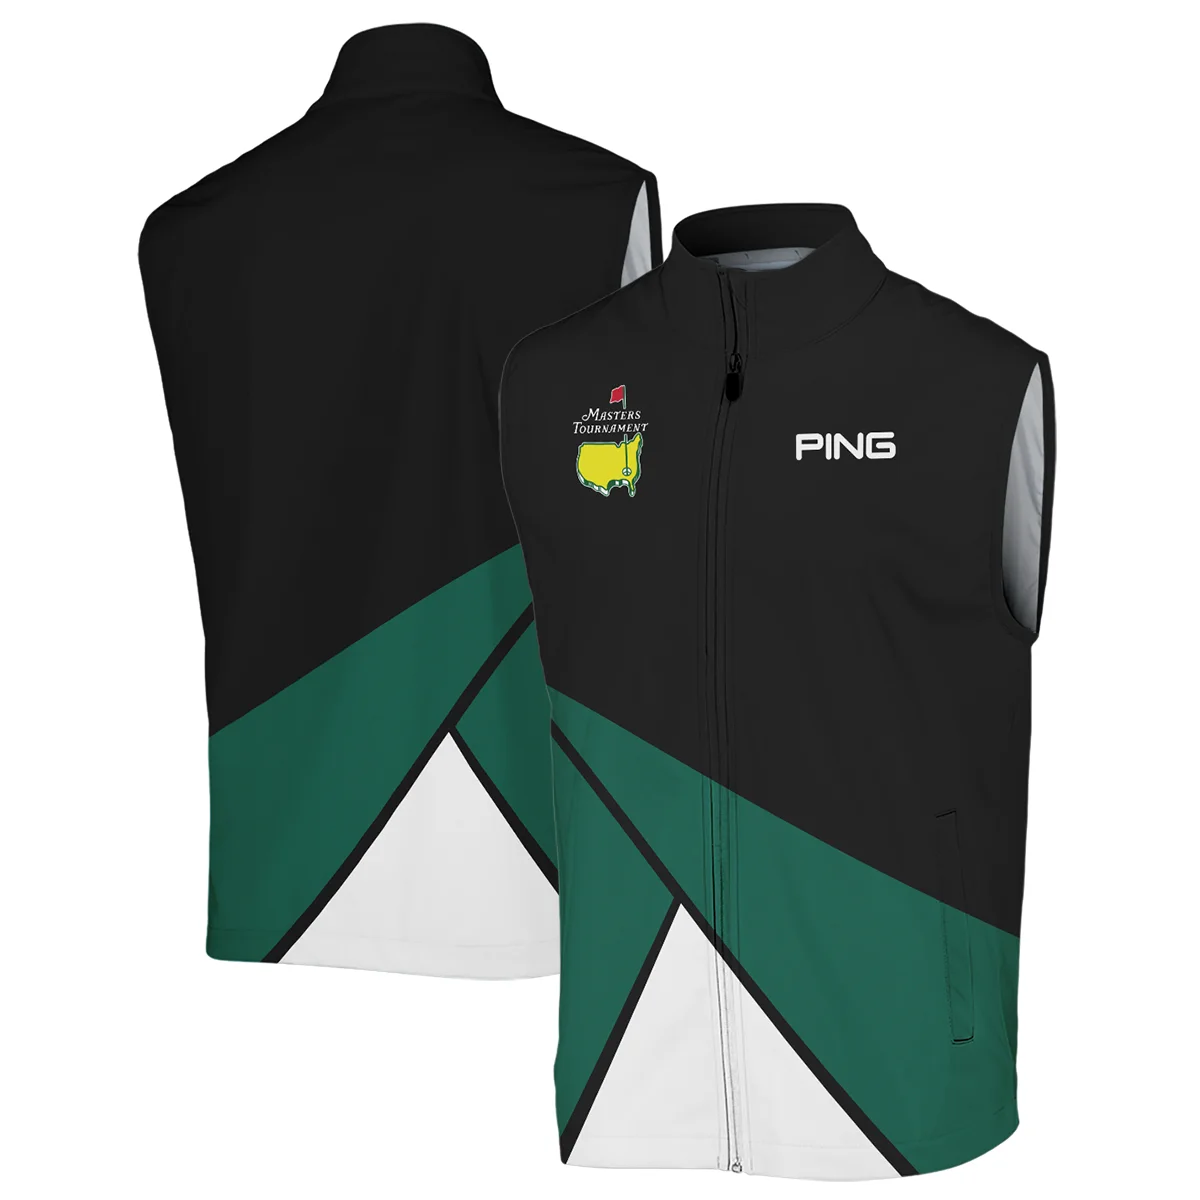 Golf Masters Tournament Ping Hawaiian Shirt Black And Green Golf Sports All Over Print Oversized Hawaiian Shirt